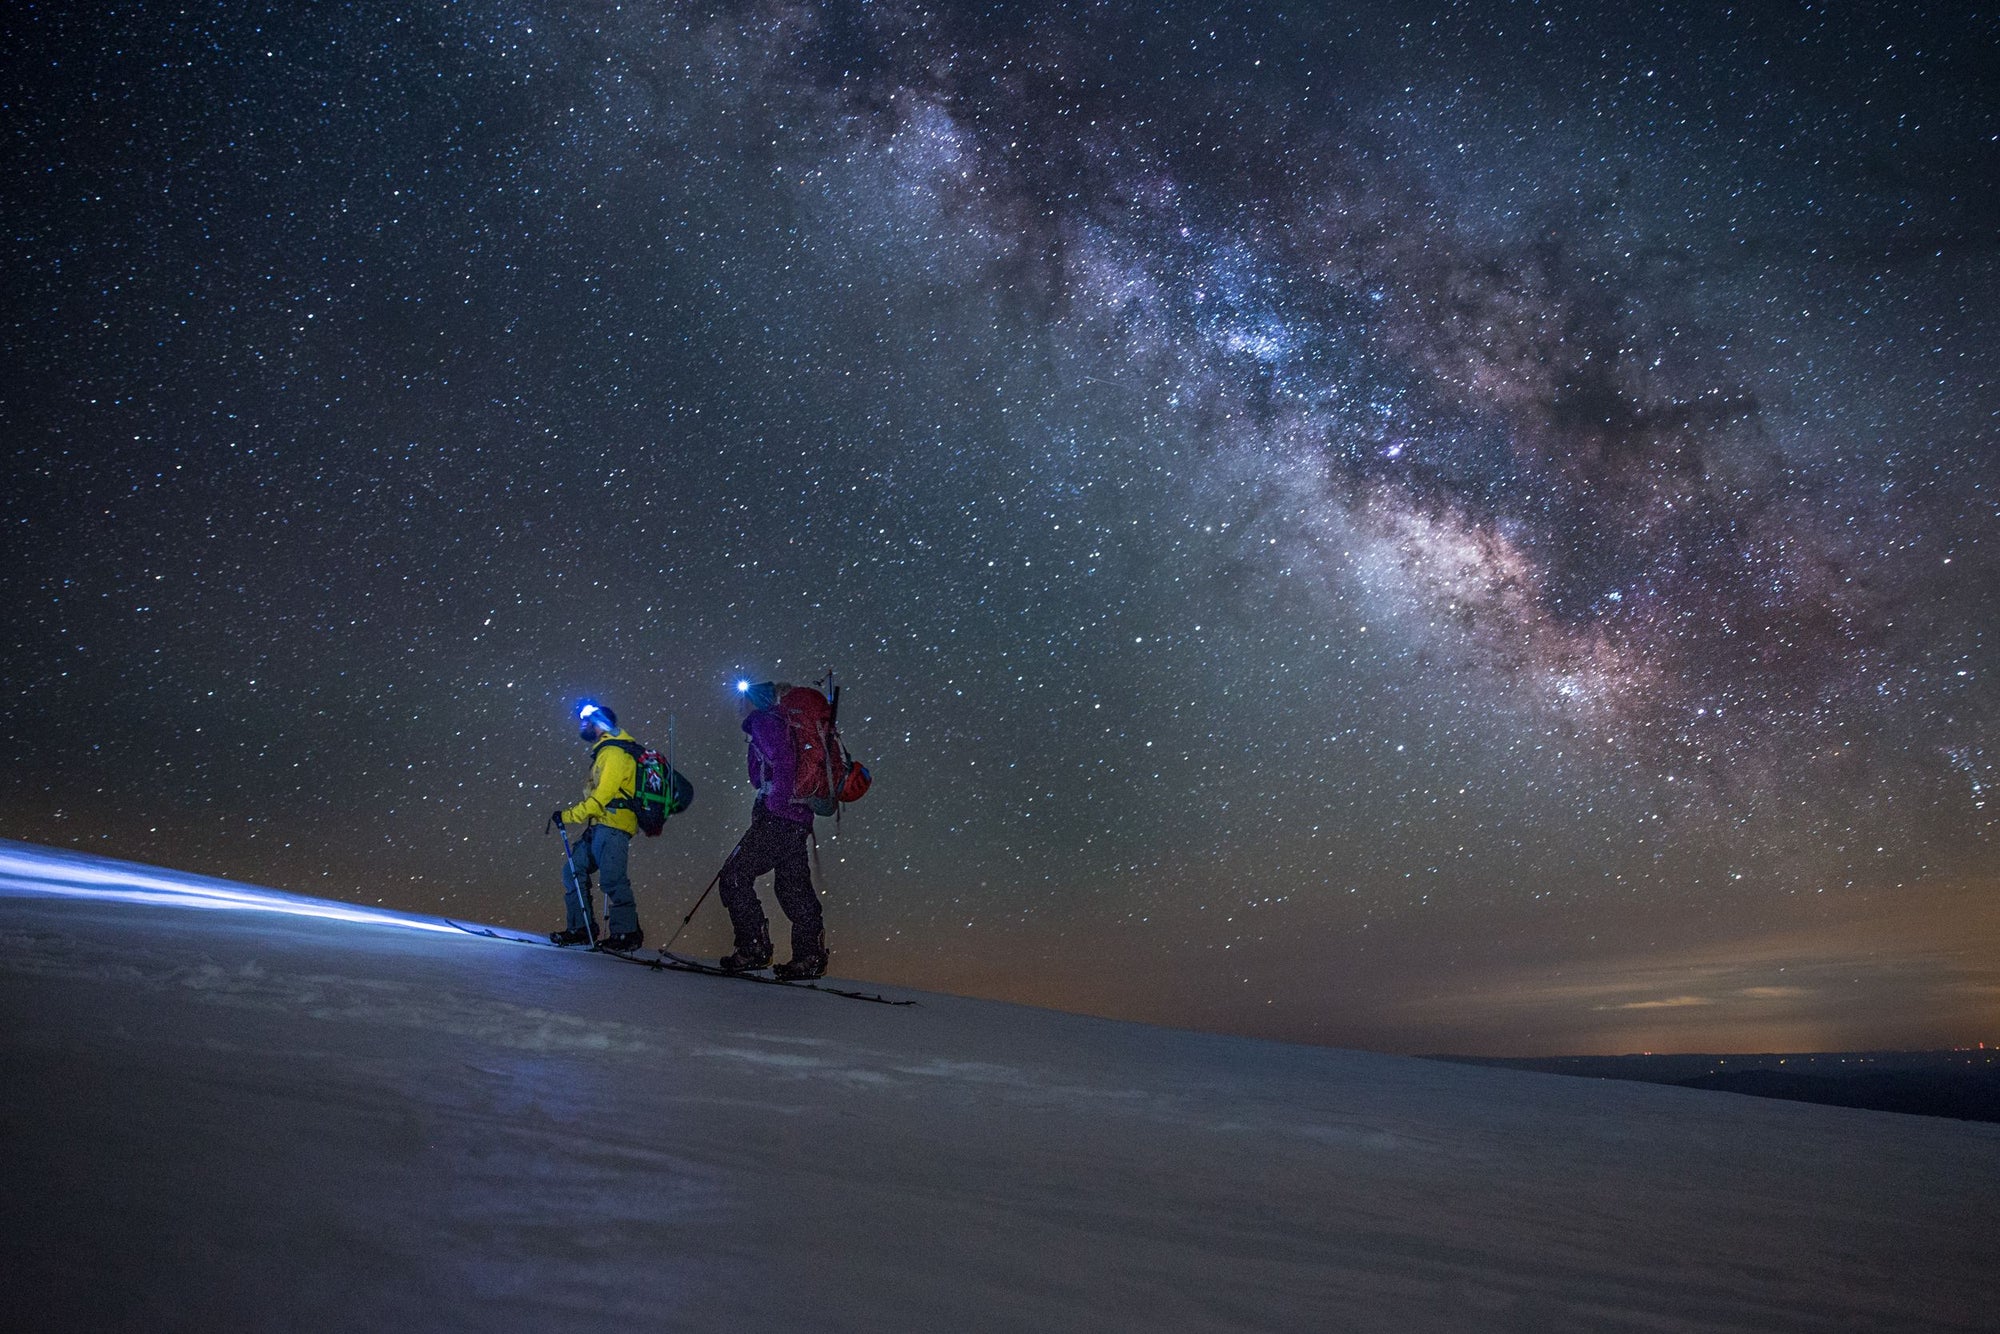 Two splitboarders skin up Mt.Shasta under the Milky Way.